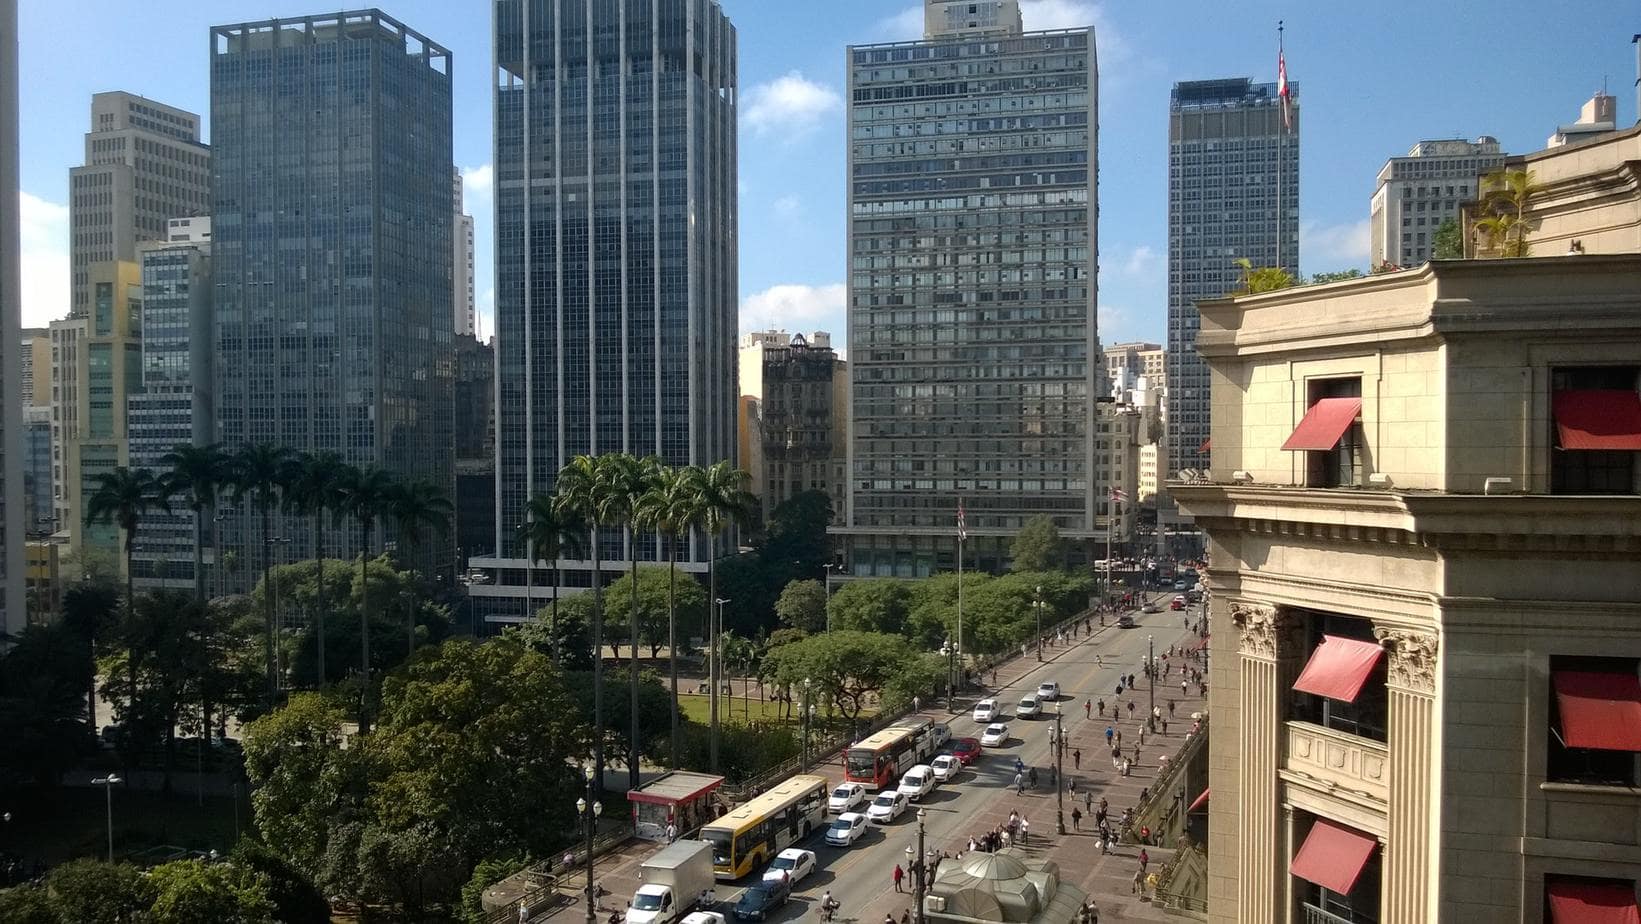 Praça Ramos de Azevedo, São Paulo Downtown - Brazil